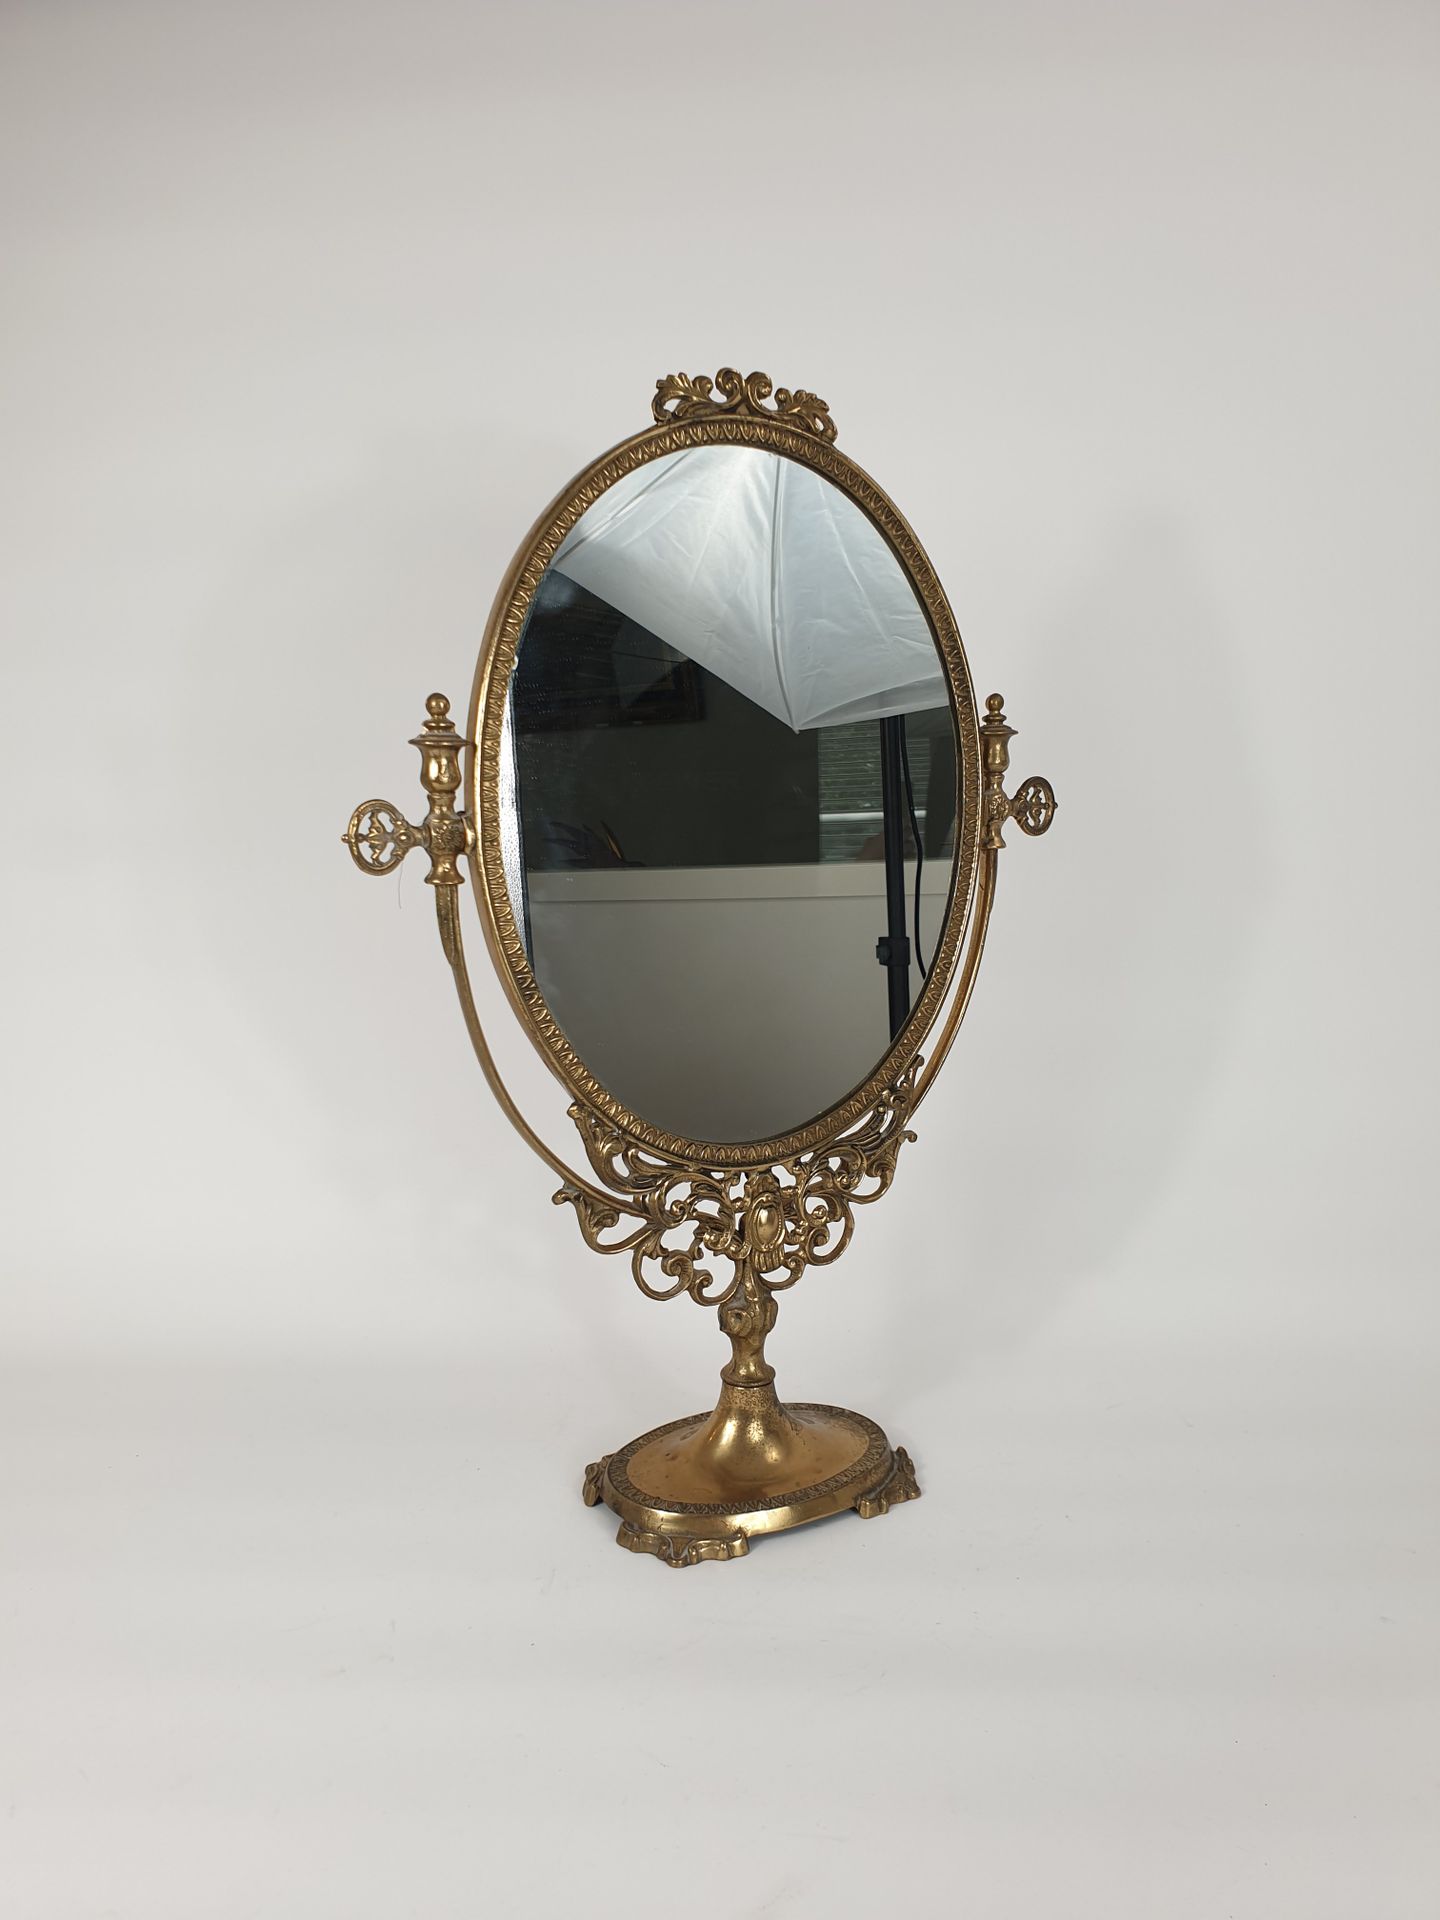 Null Espejo de mesa basculante ovalado de latón.
54,5 x 39 x 12 cm